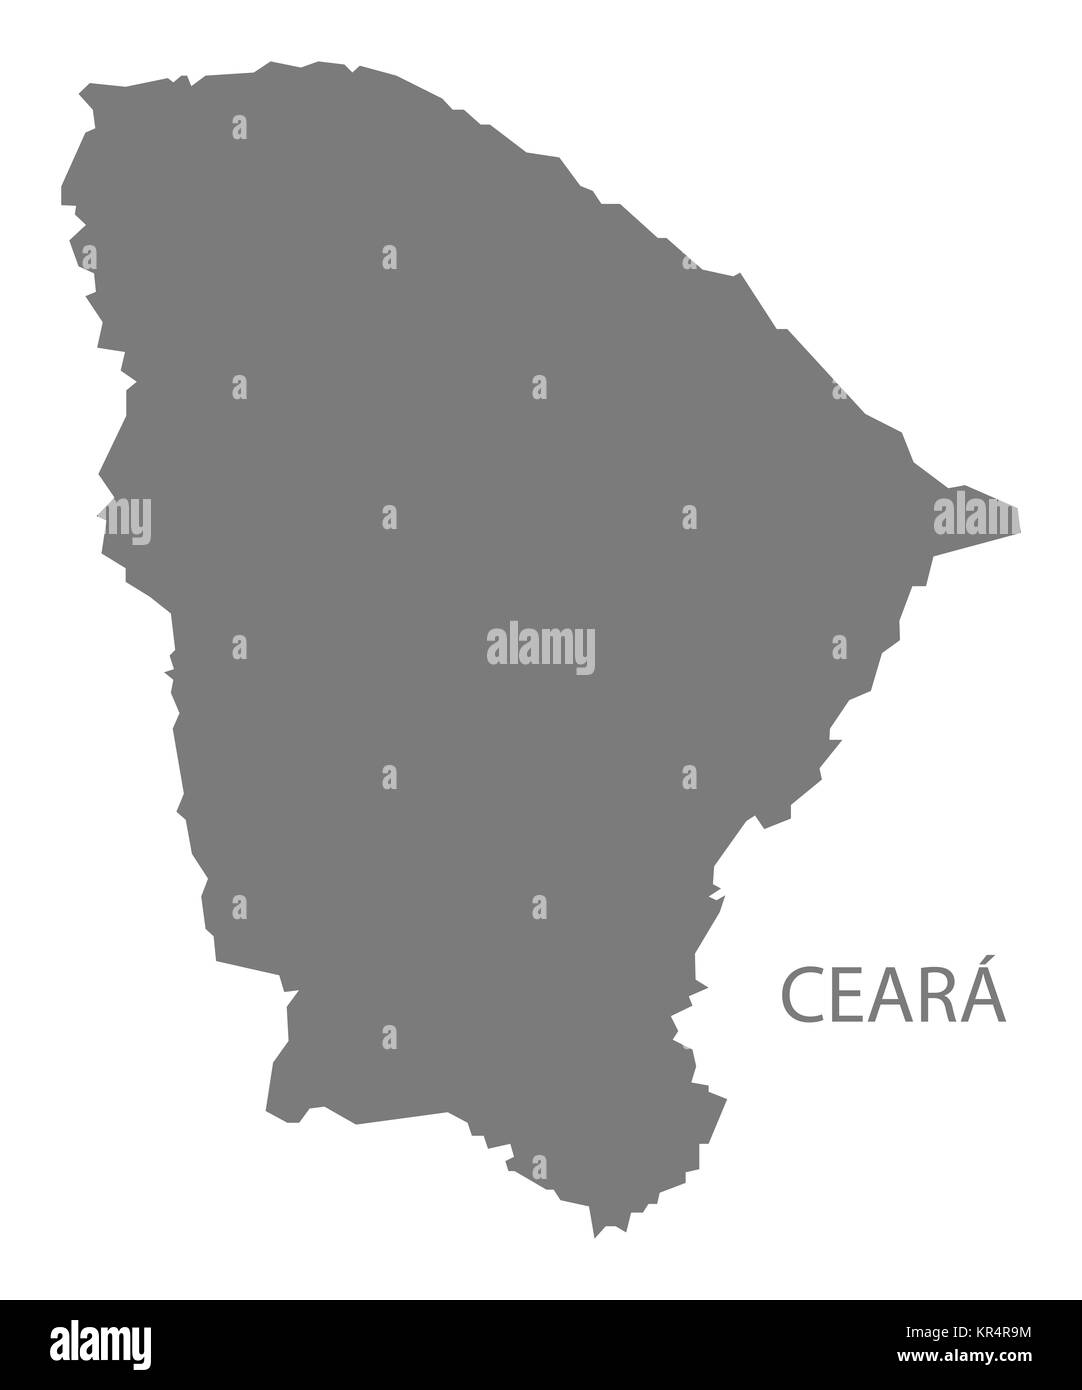 Ceara Brazil Map grey Stock Photo